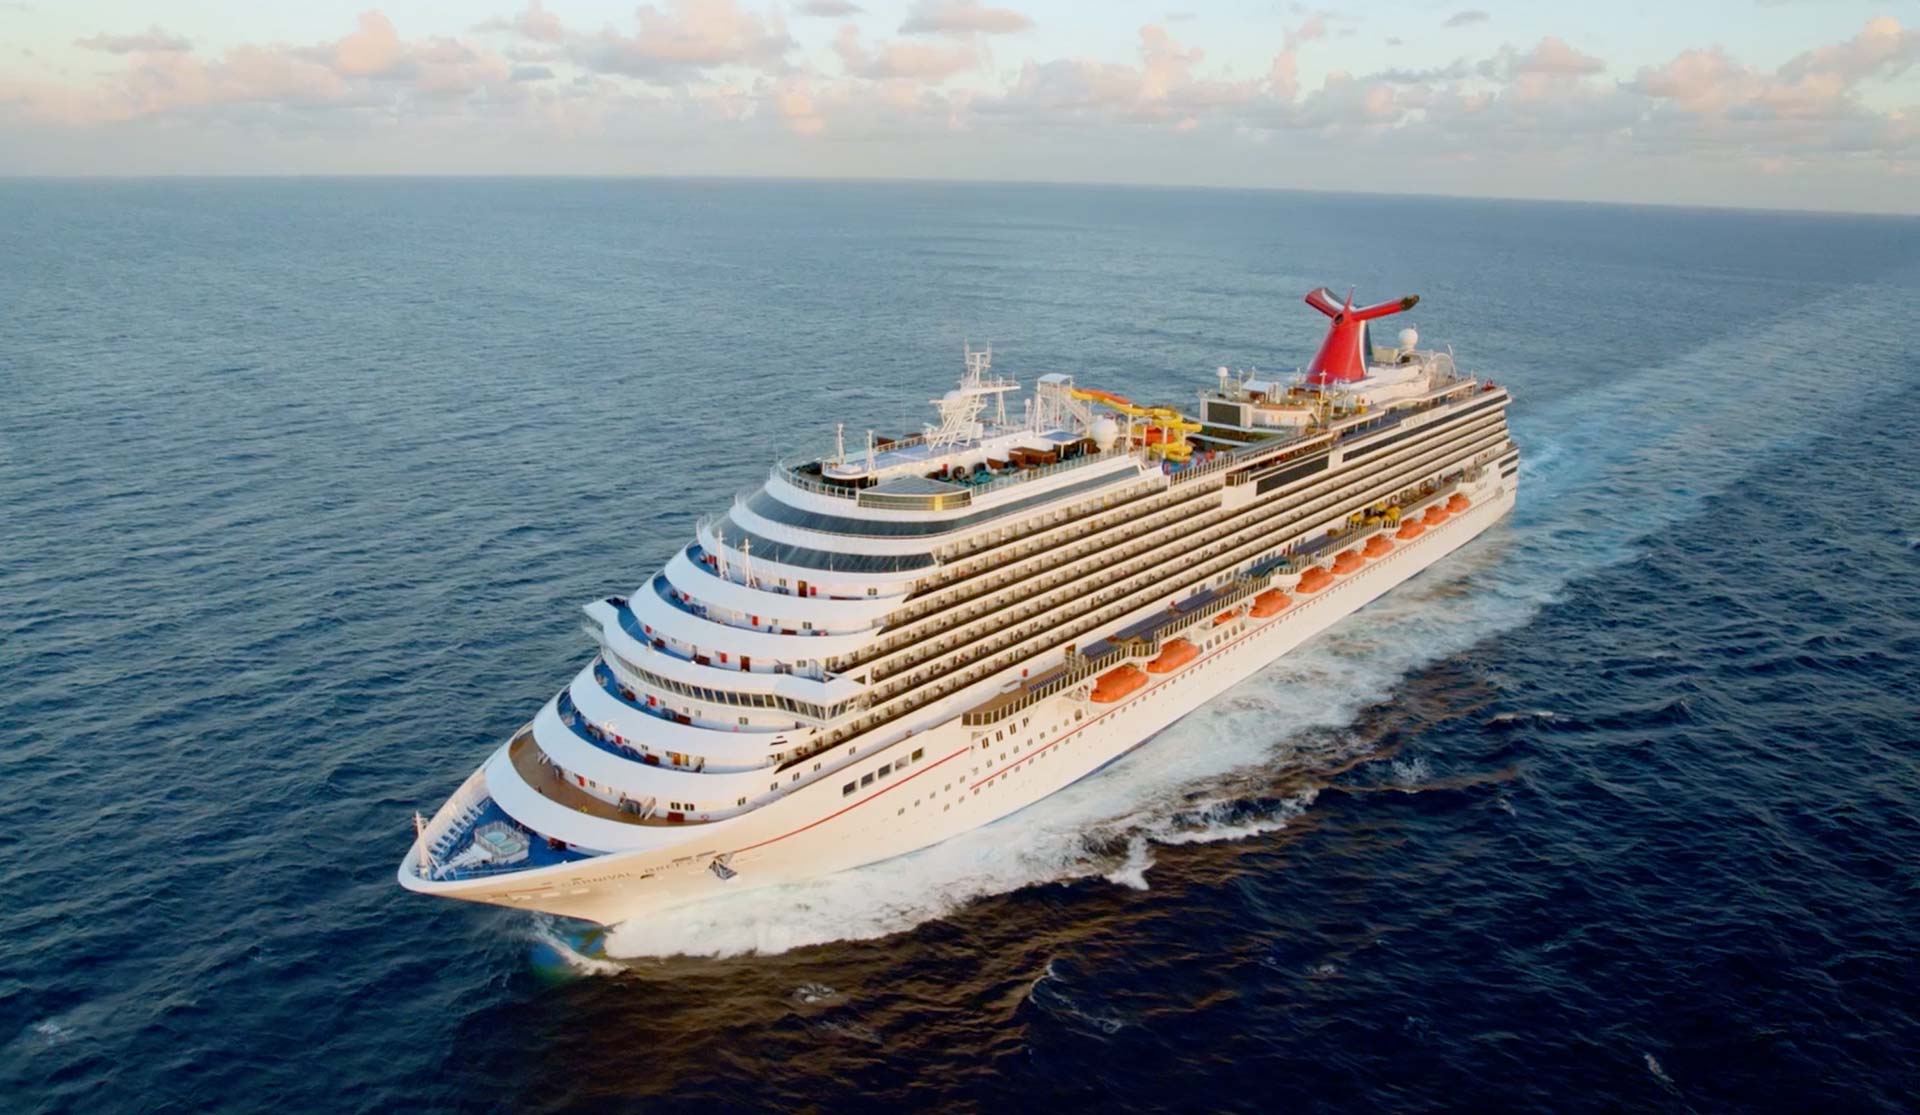 A Carnival cruise ship at sea